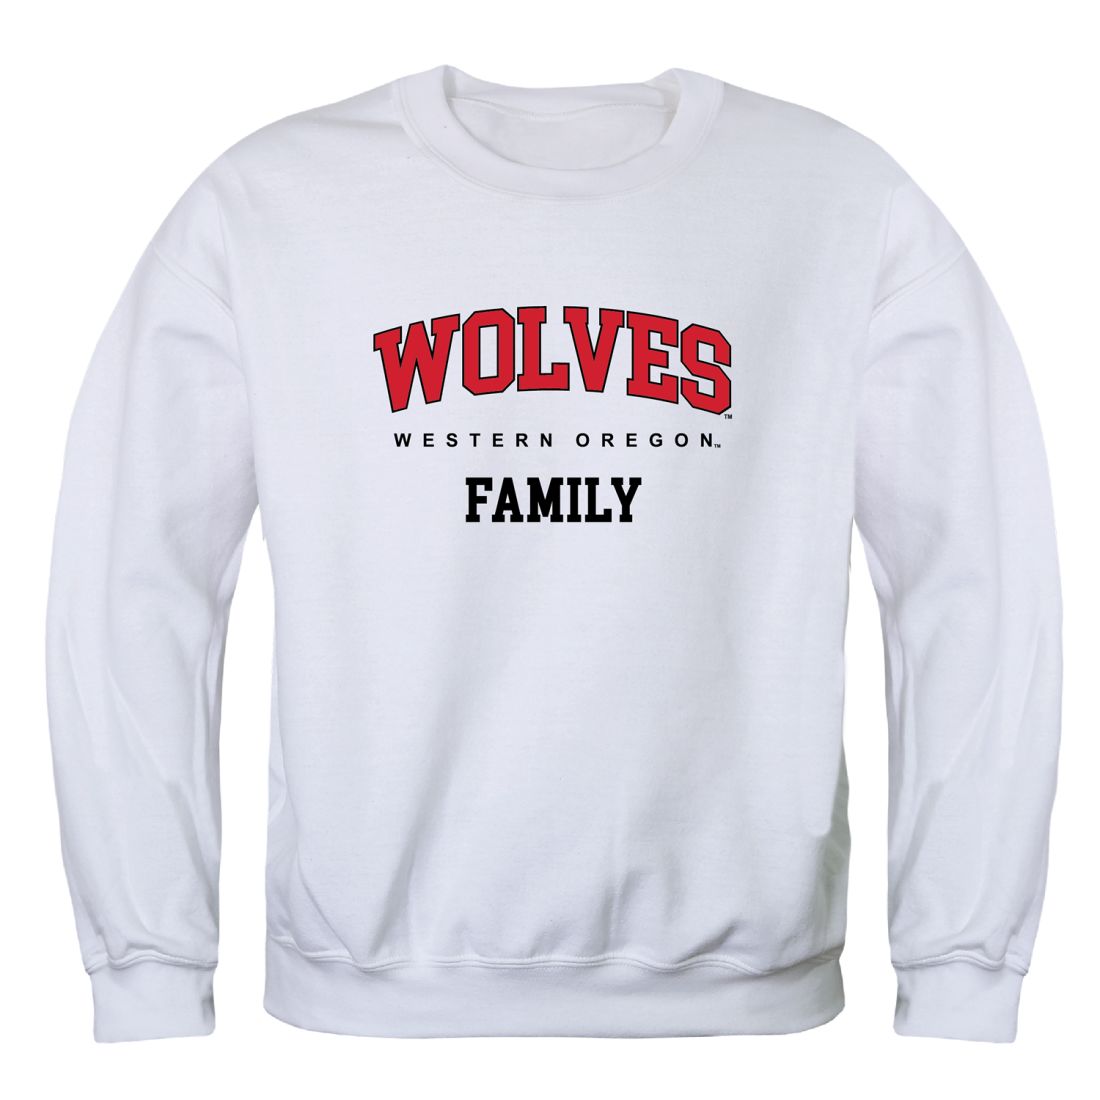 WOU-Western-Oregon-University-Wolves-Family-Fleece-Crewneck-Pullover-Sweatshirt